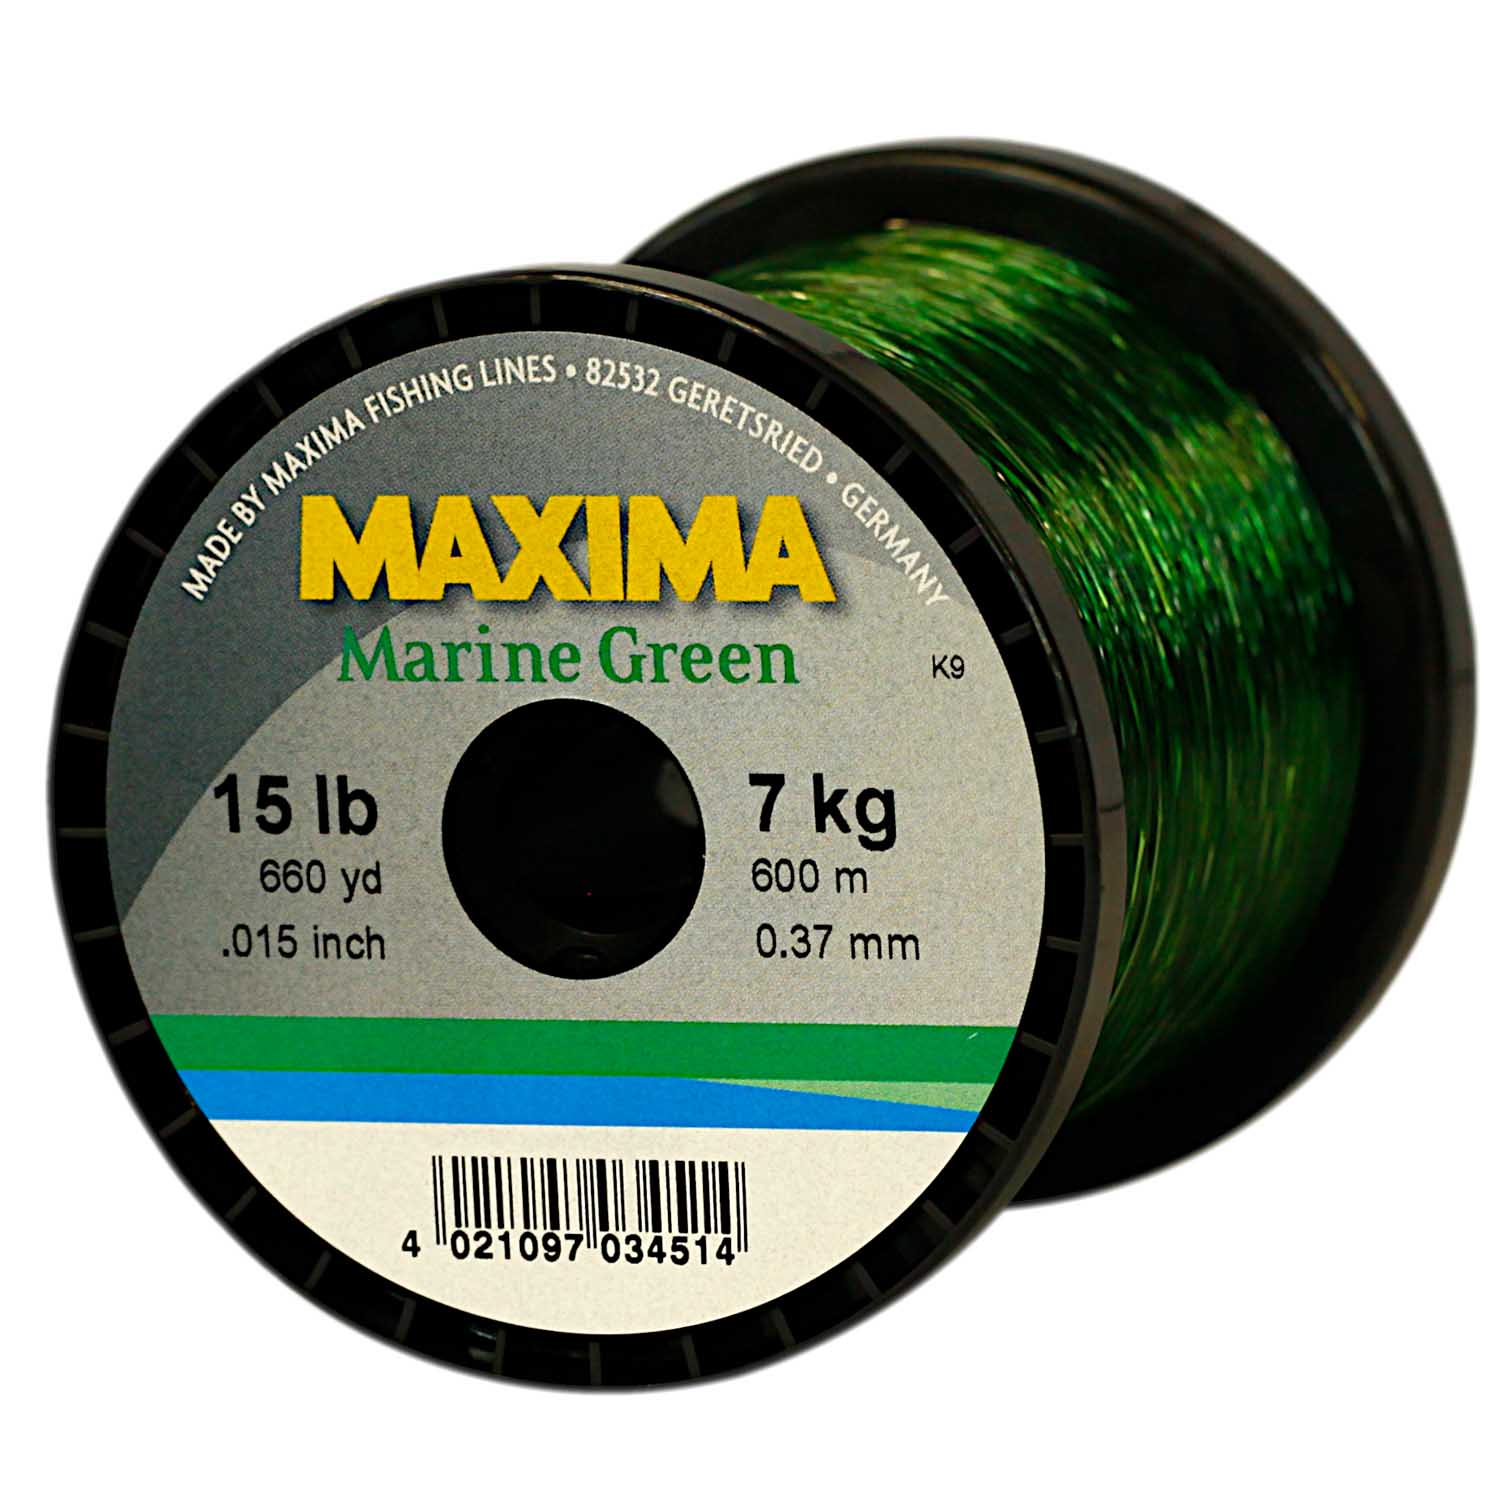 Maxima Nylon Fishing Line, 7KG/15LB 0.37MM, Colour Marine Green, 600M Spool  - Showspace